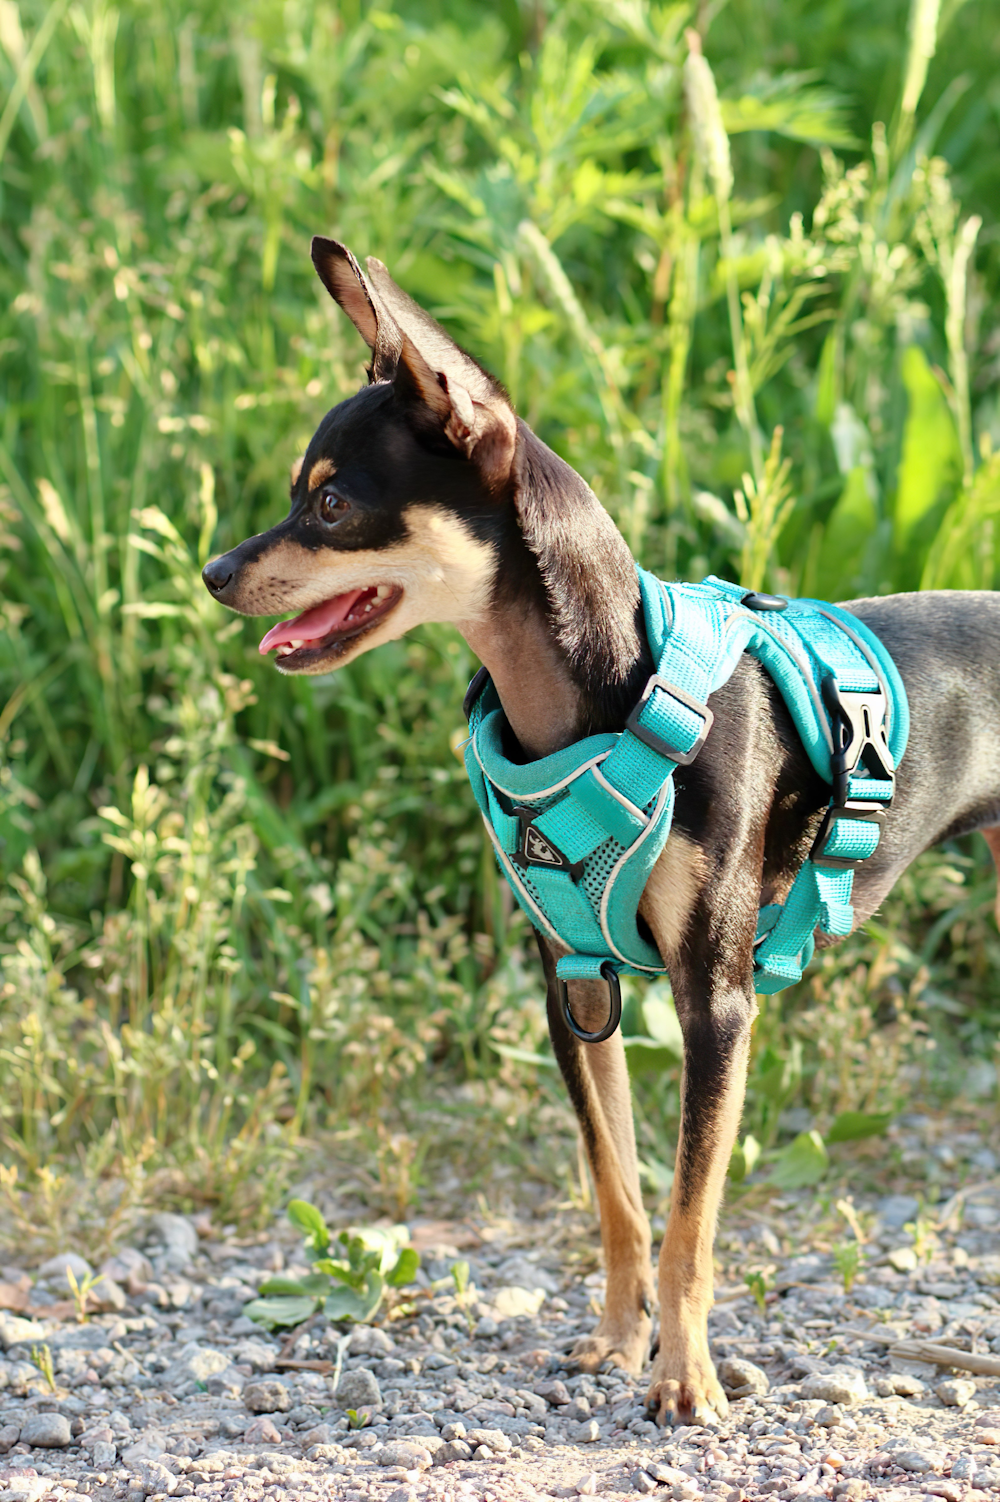 Un perro pequeño con un arnés azul parado en un campo